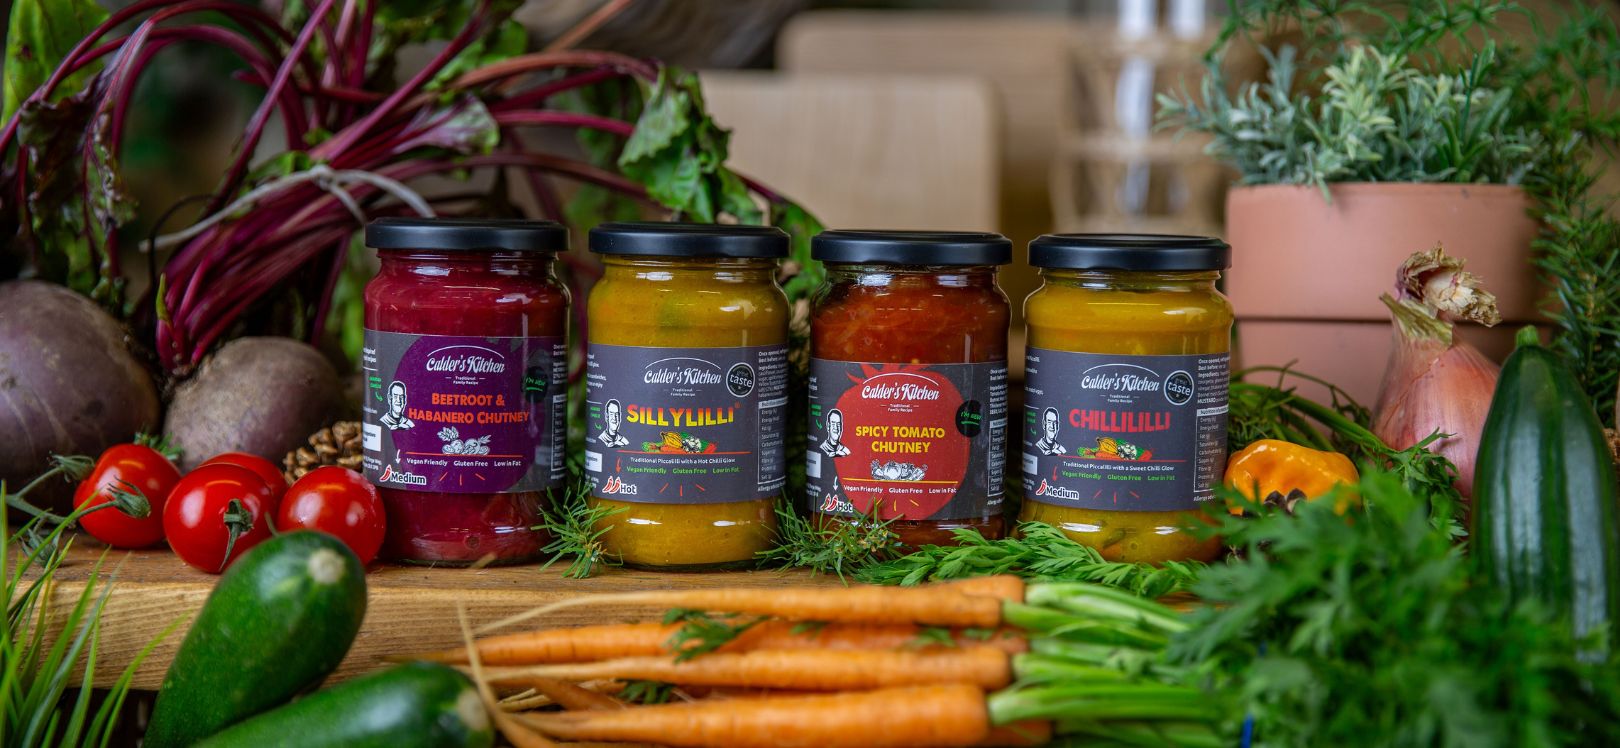 Pickle jars surround by vegetables